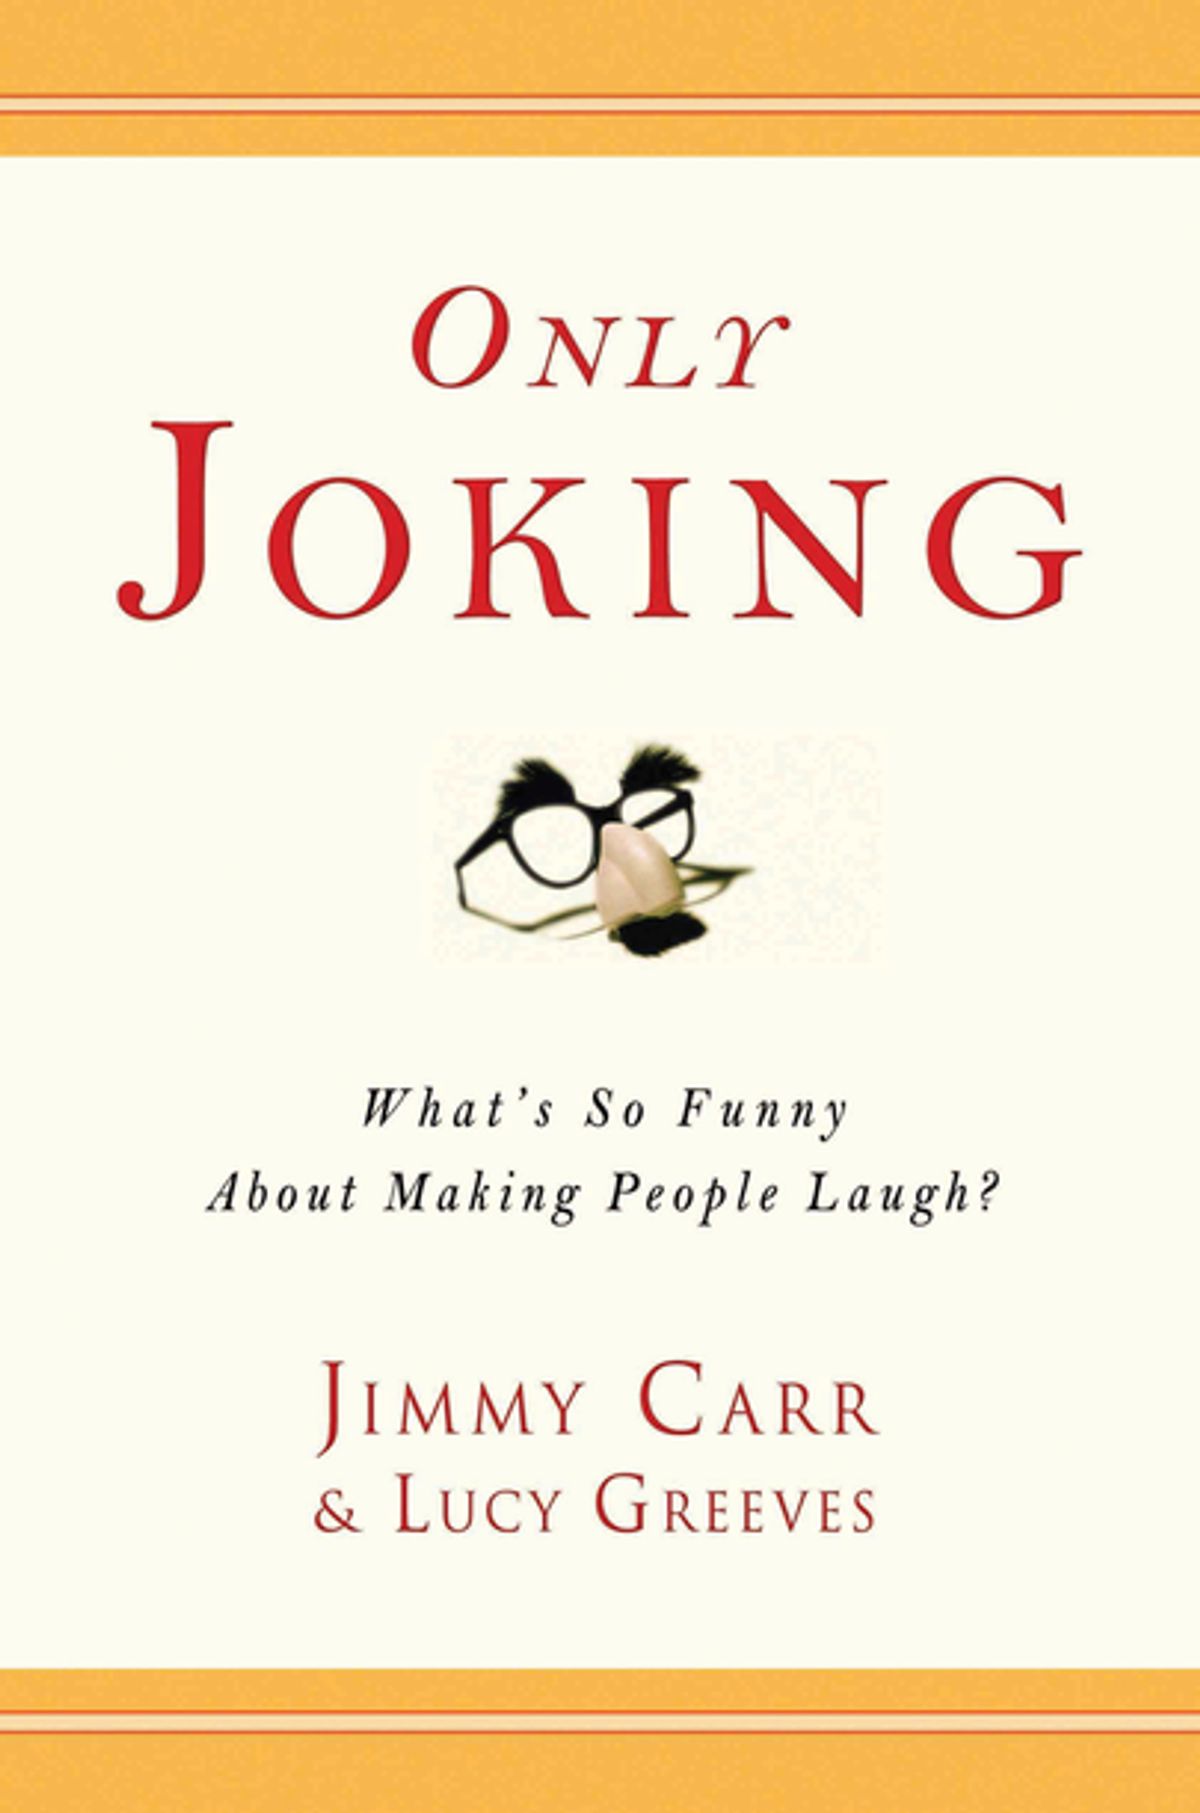 Only joking. Jimmy Carr jokes. Only jokes. Only joking Music.